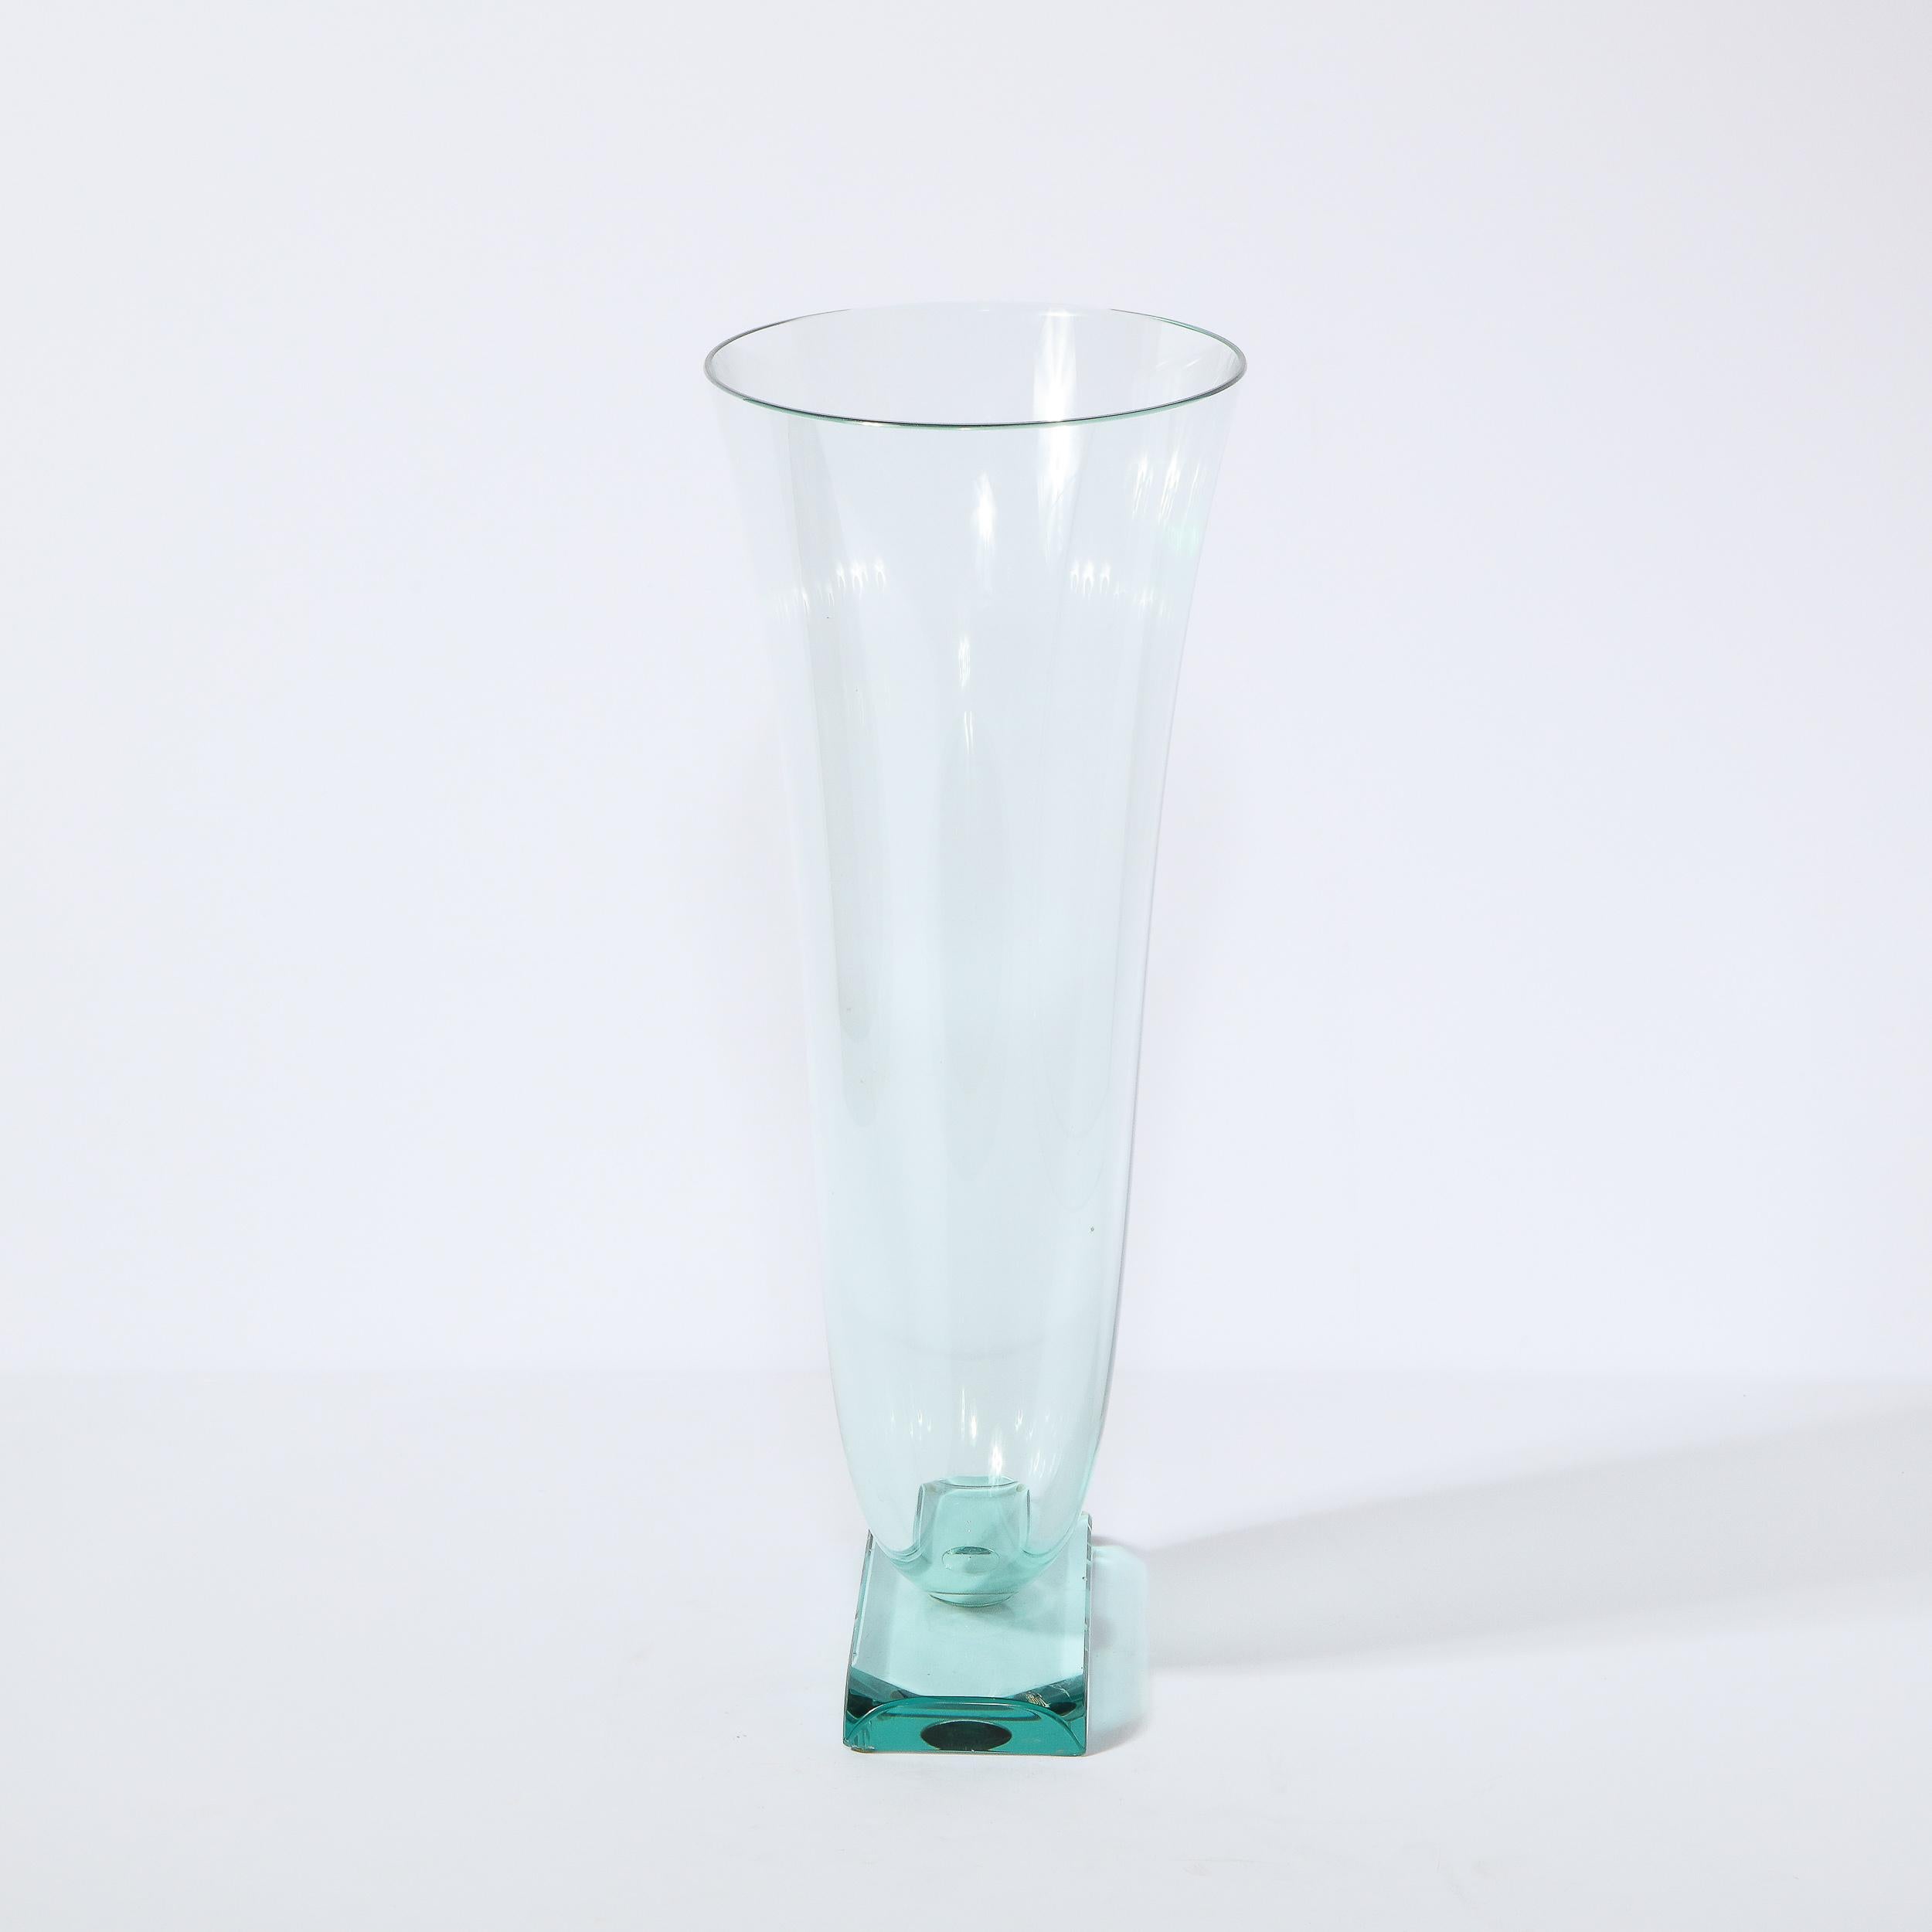 Late 20th Century Modernist Sculptural Translucent Acqua Vase Signed by Schlanser Studio